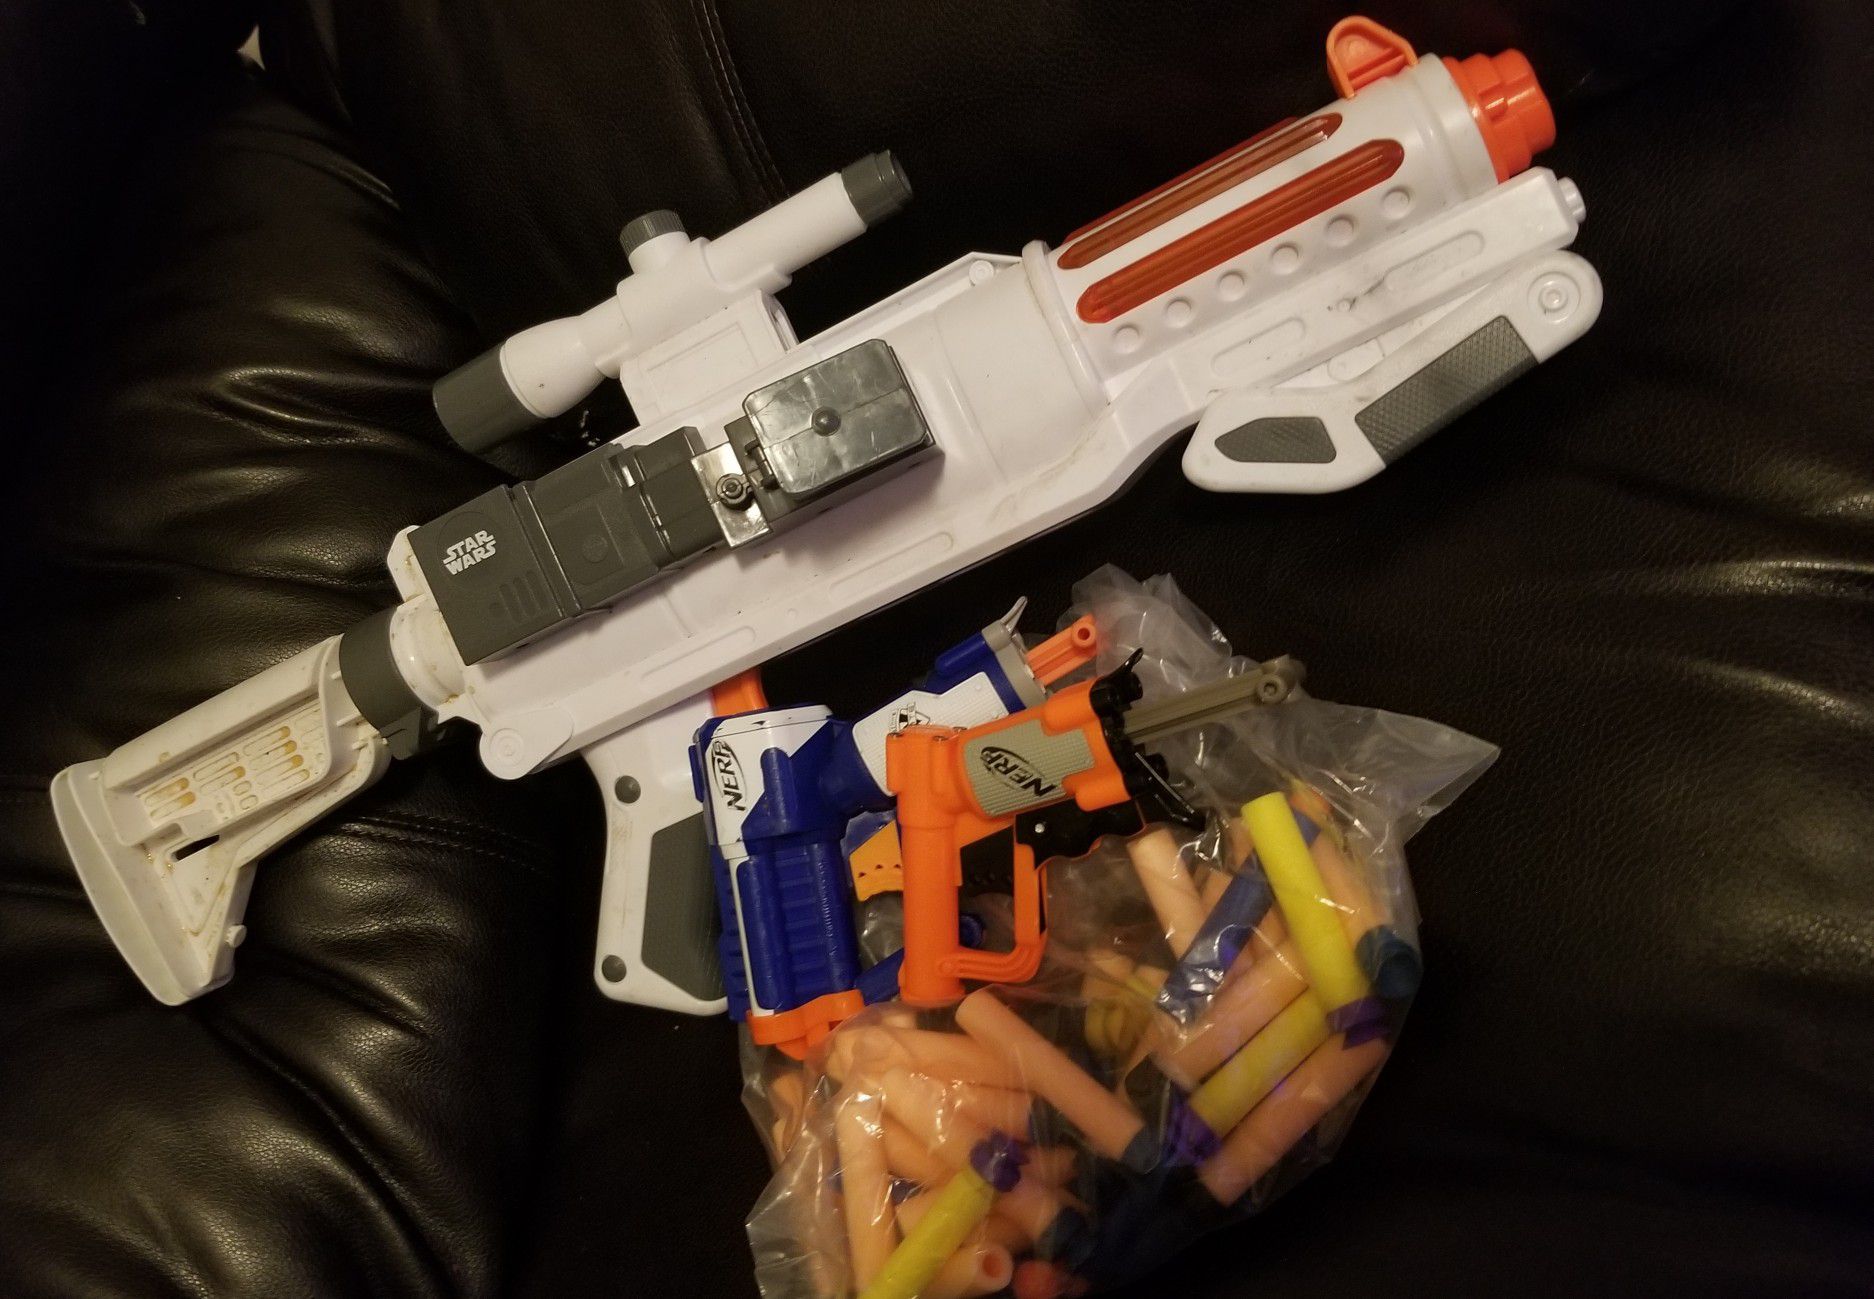 BEST OFFER! Star Wars Nerf Captain Phasma Blaster & 2 Mini Nurf Guns. Porch pick up Available